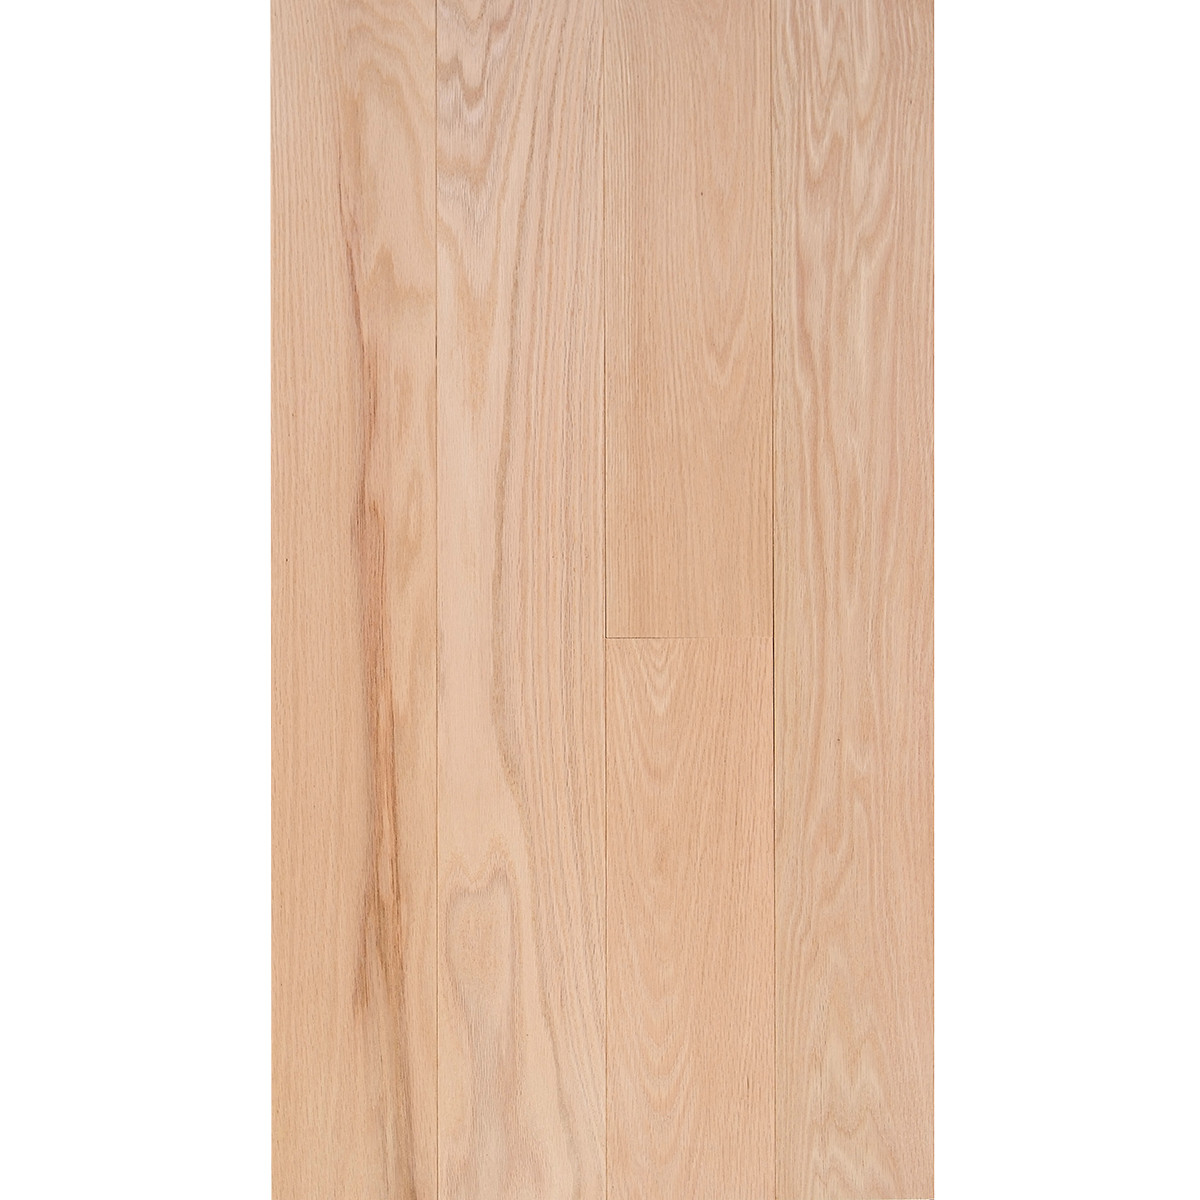 11 Perfect Oak or Maple Hardwood Floors which is Better 2024 free download oak or maple hardwood floors which is better of red oak 3 4 x 5 select grade flooring for fs 5 redoak select em flooring